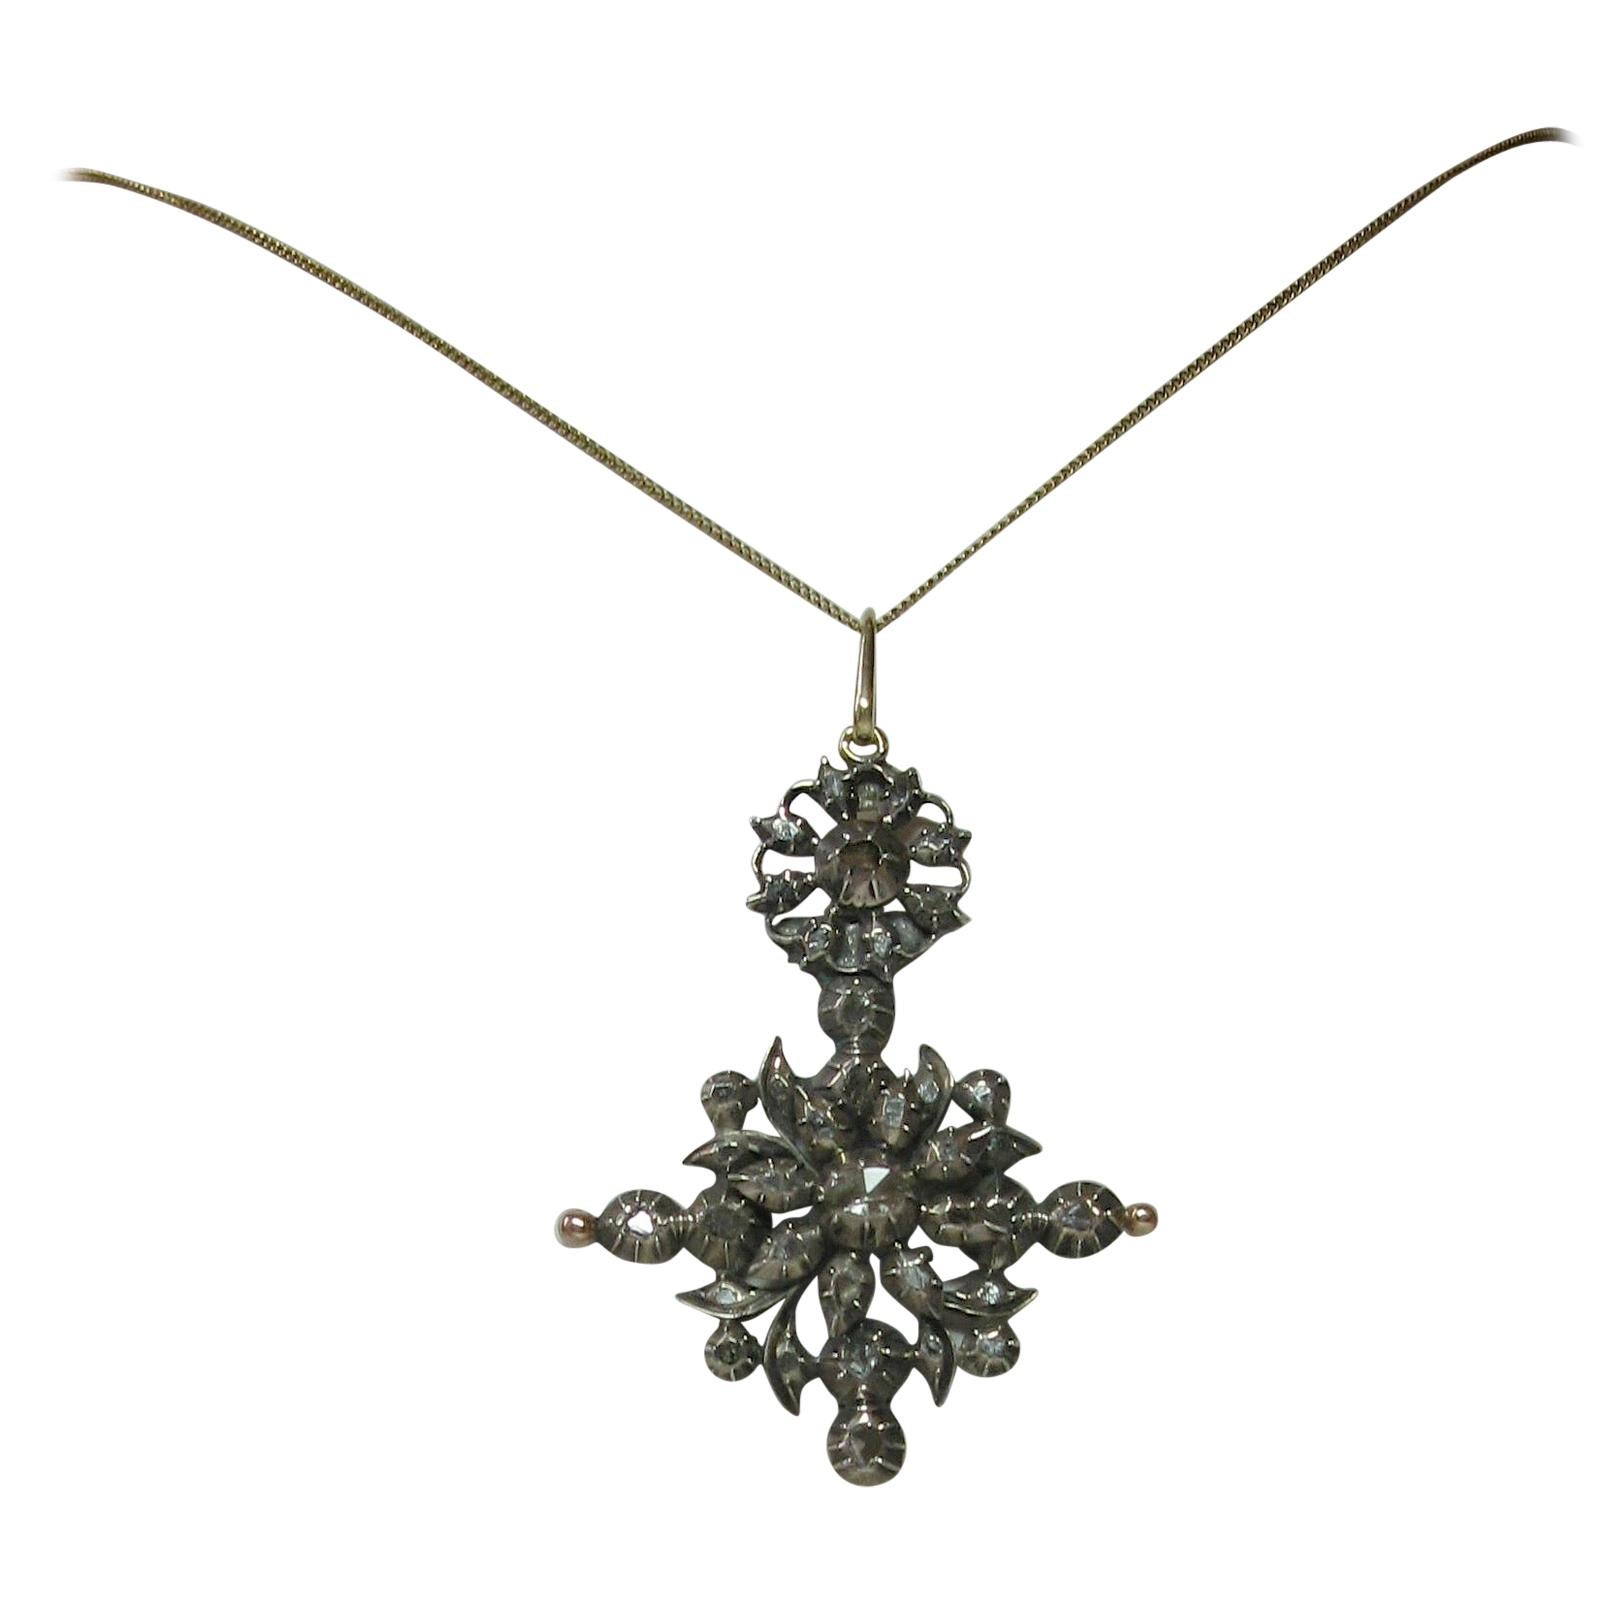 Rare Georgian Rose Cut Diamond Pendant circa 1700 14 Karat Gold Dutch Necklace